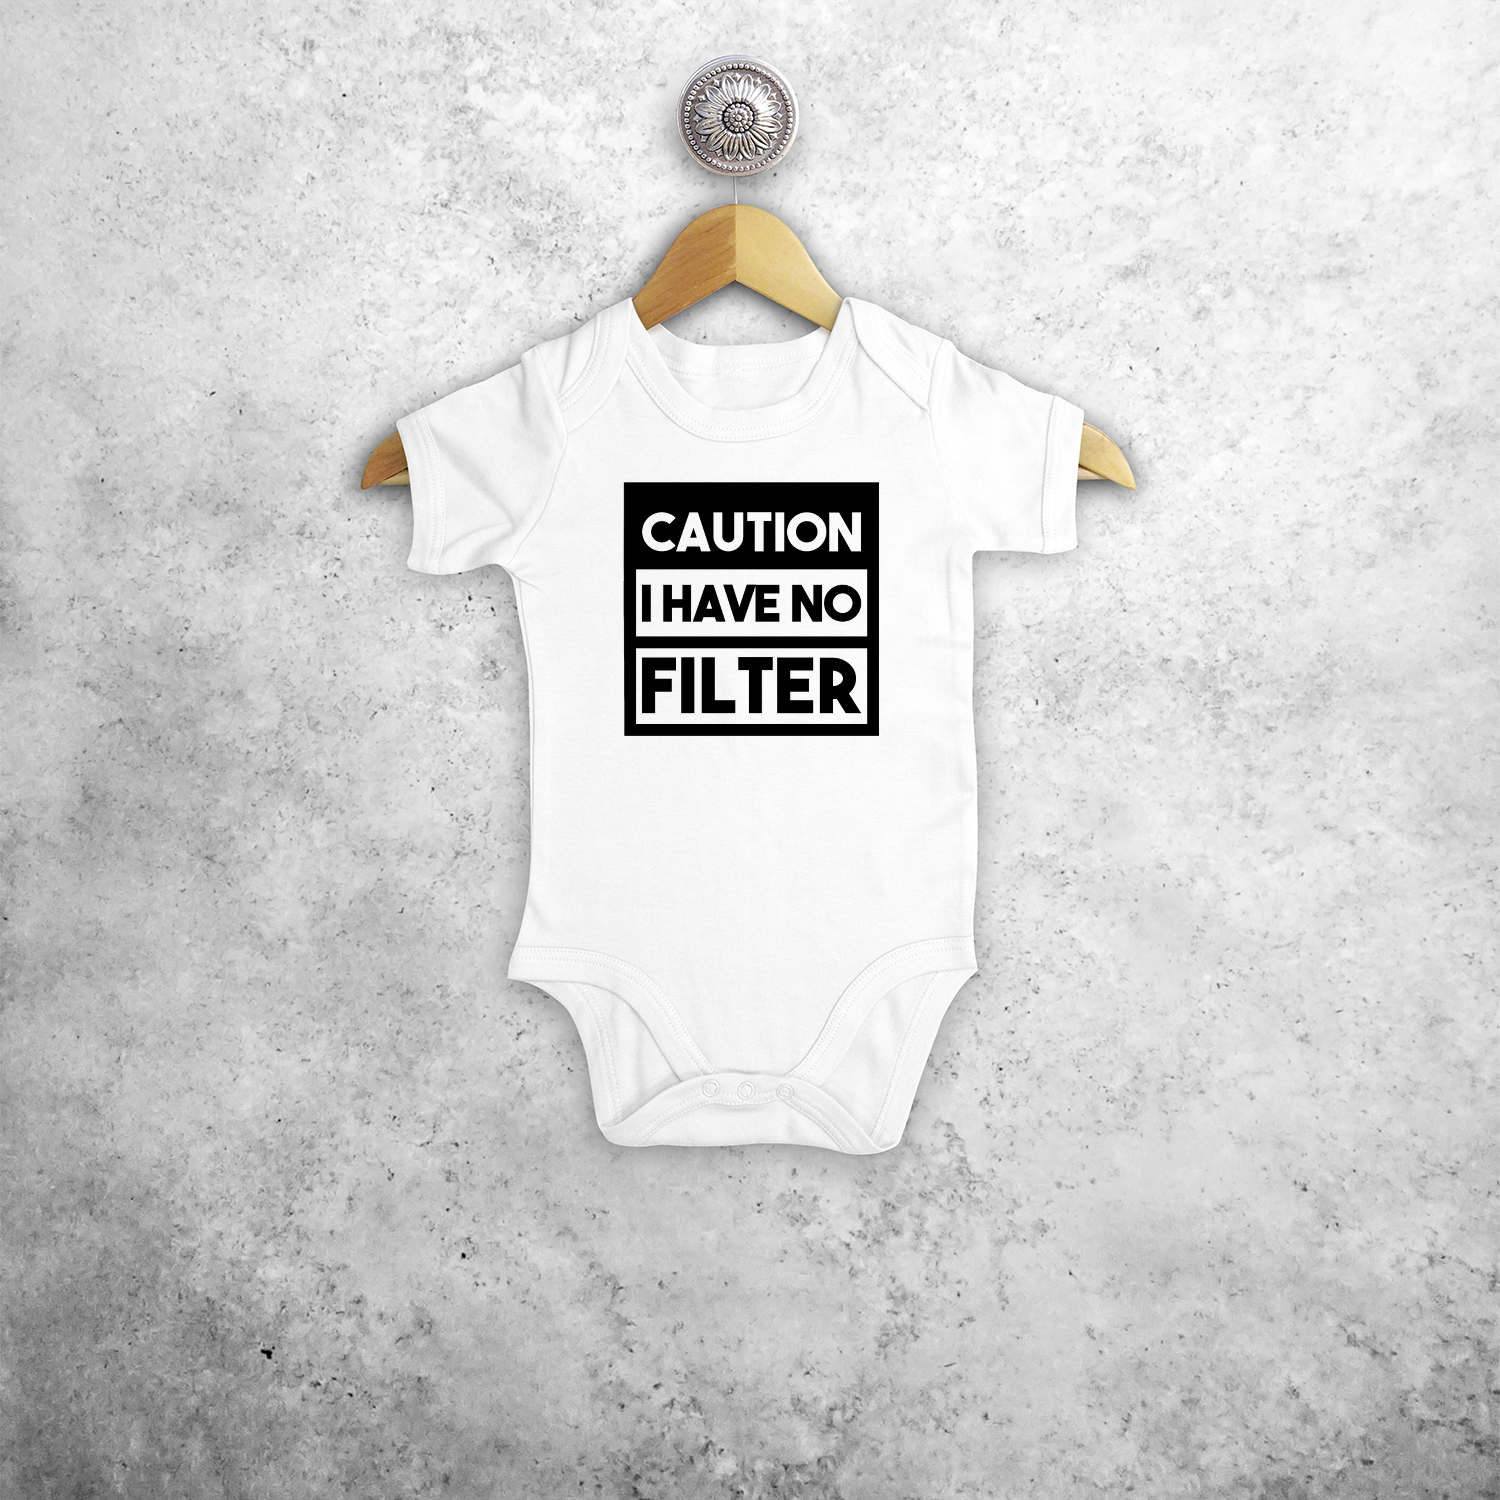 'Caution: I have no filter' baby shortsleeve bodysuit